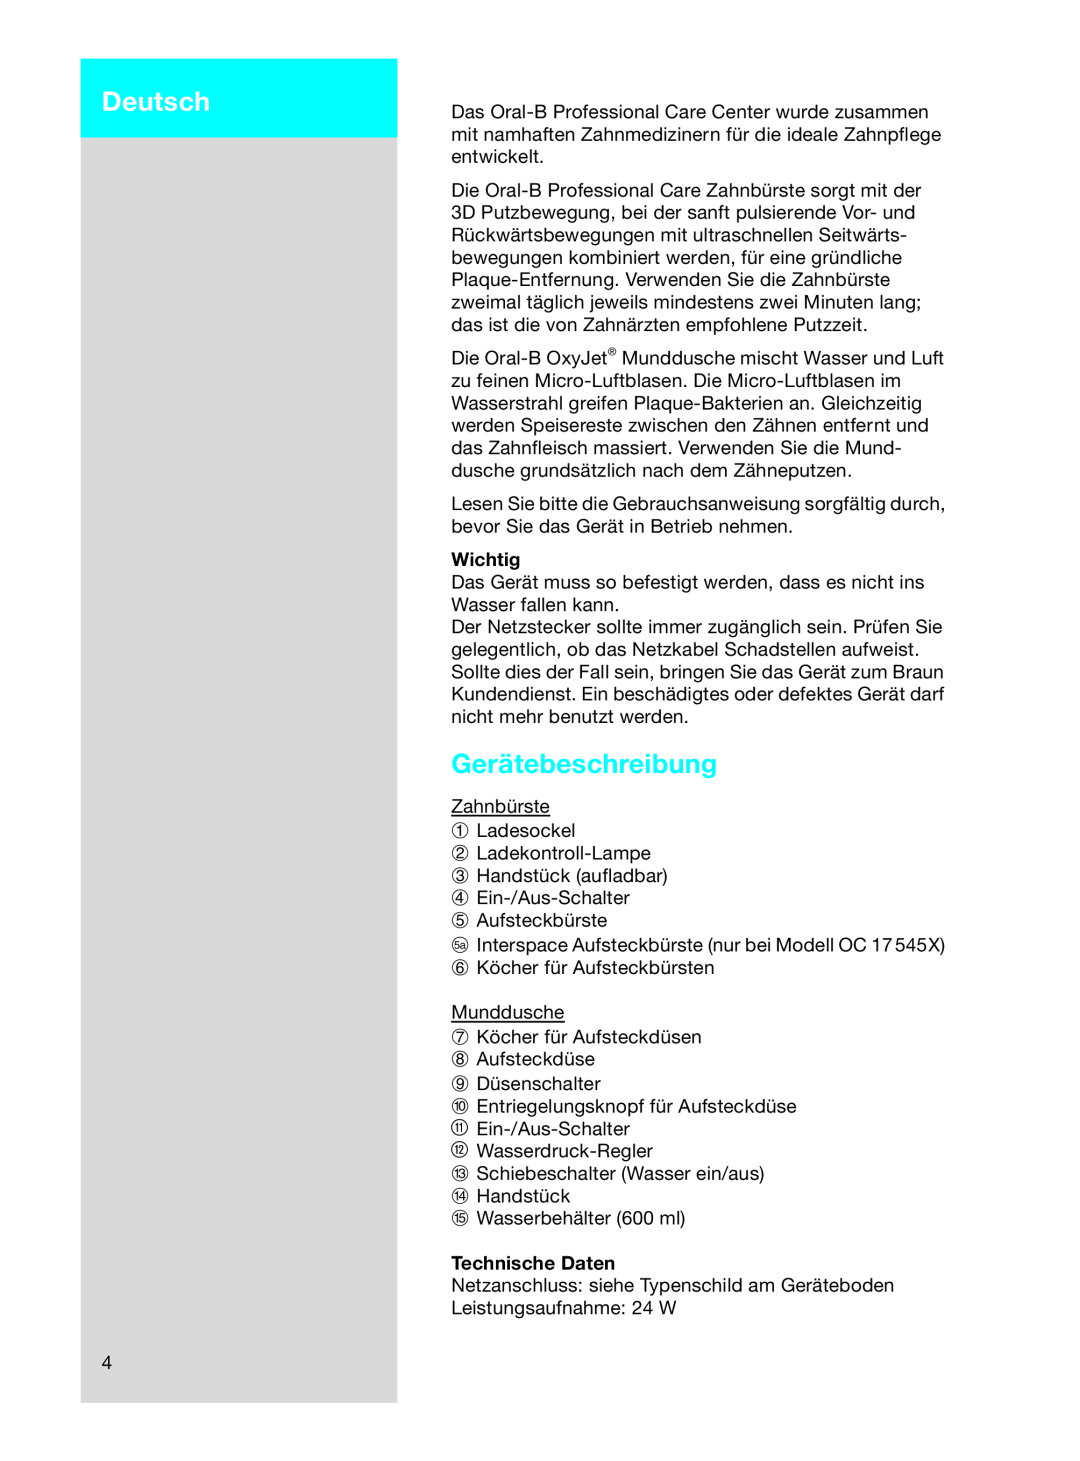 Braun OC 17545X, OC17525 manual Deutsch, Gerätebeschreibung, Wichtig, Technische Daten 